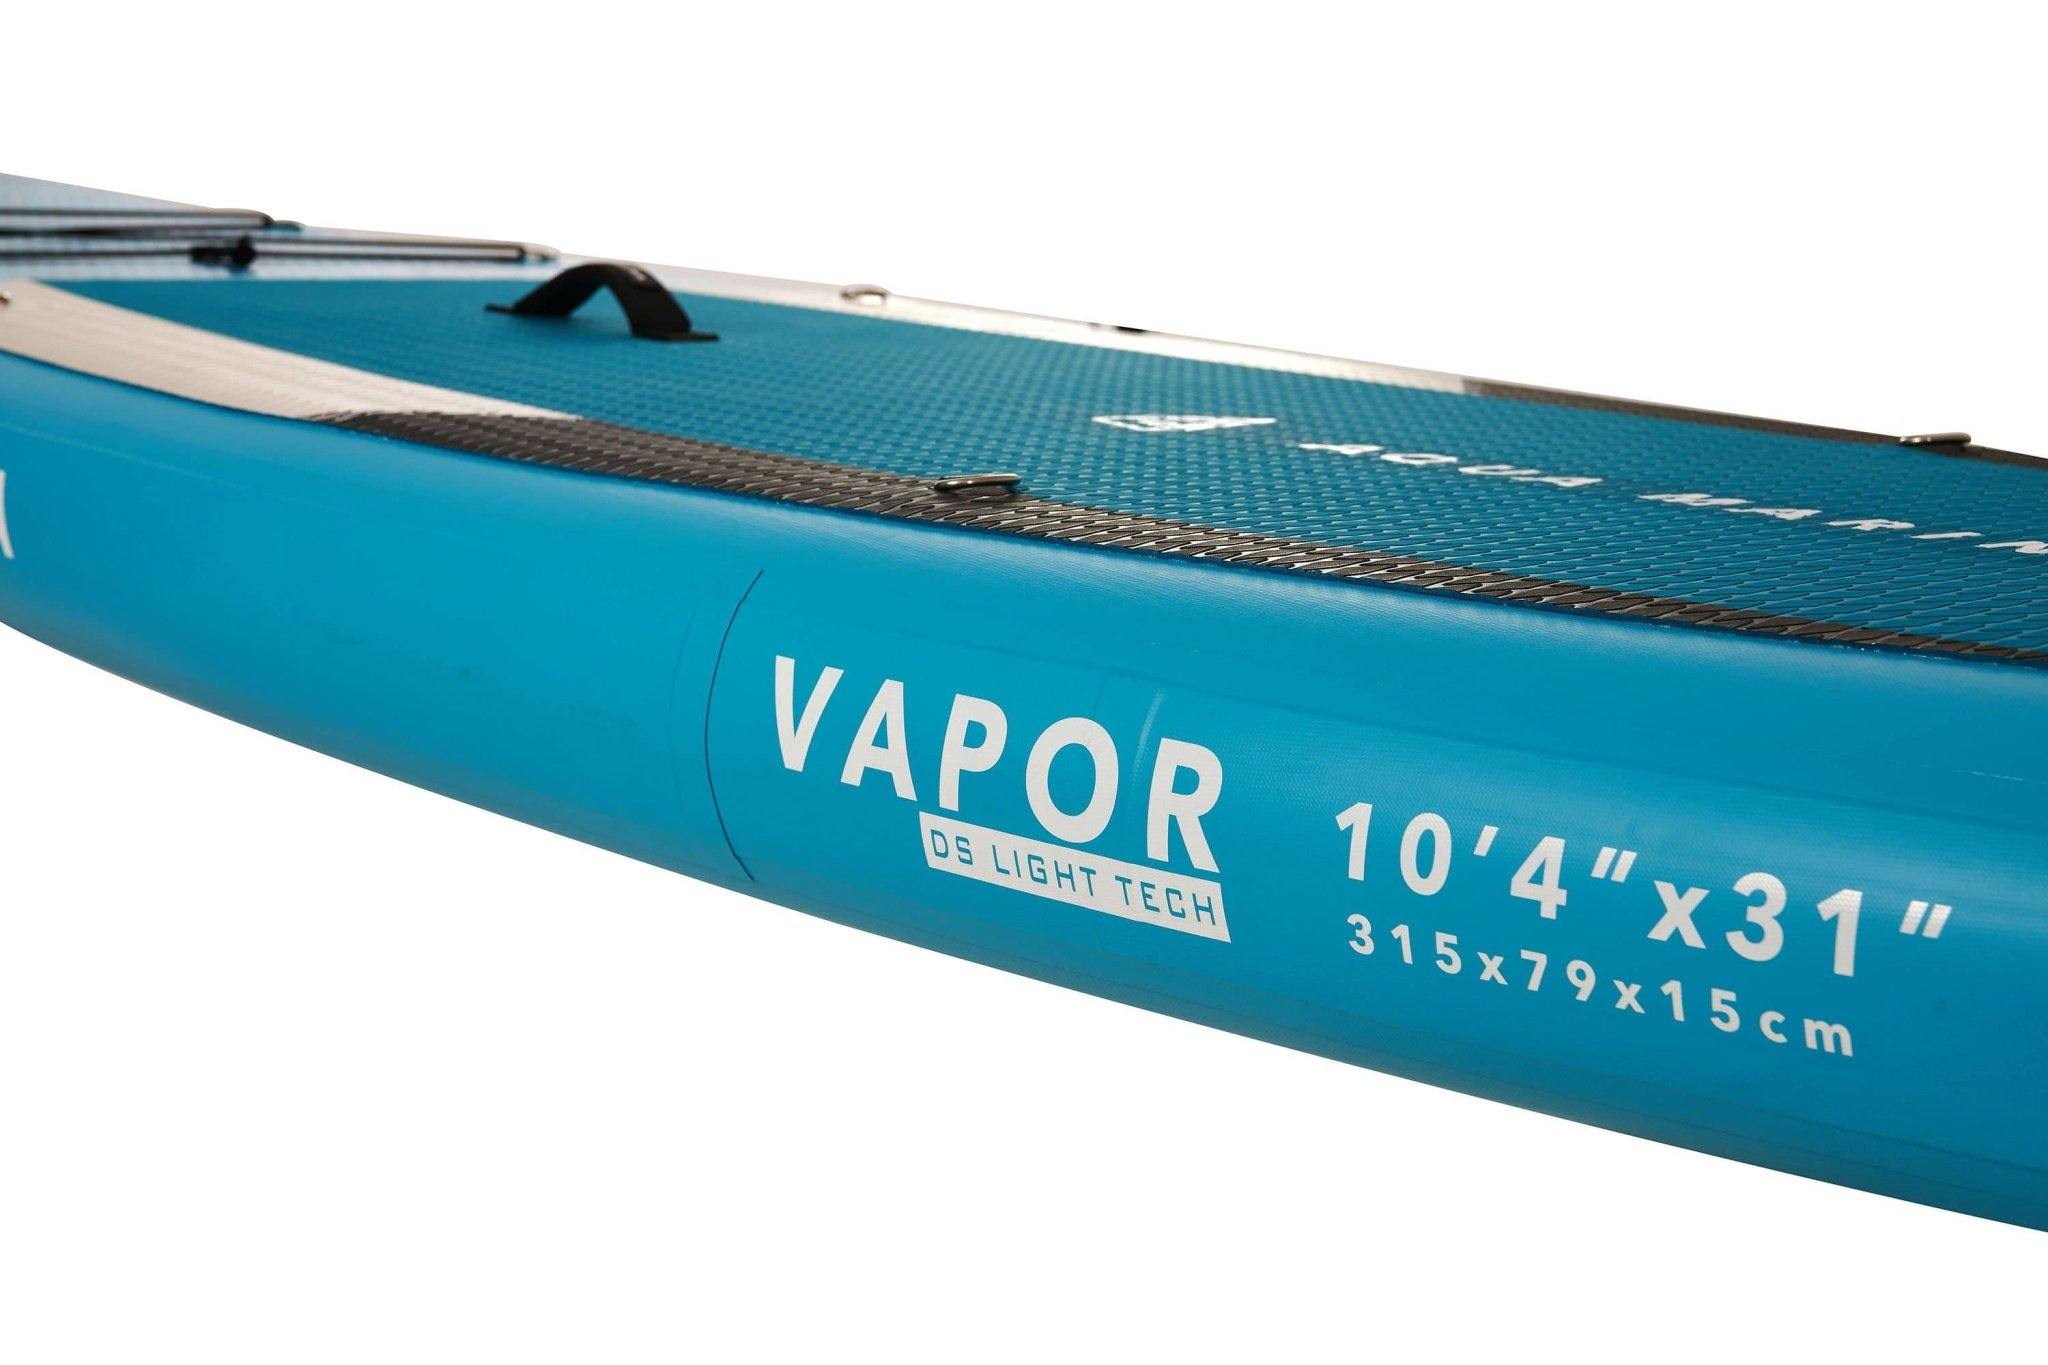 Vapor All-Around iSUP Paddle Board - Dti Direct USA